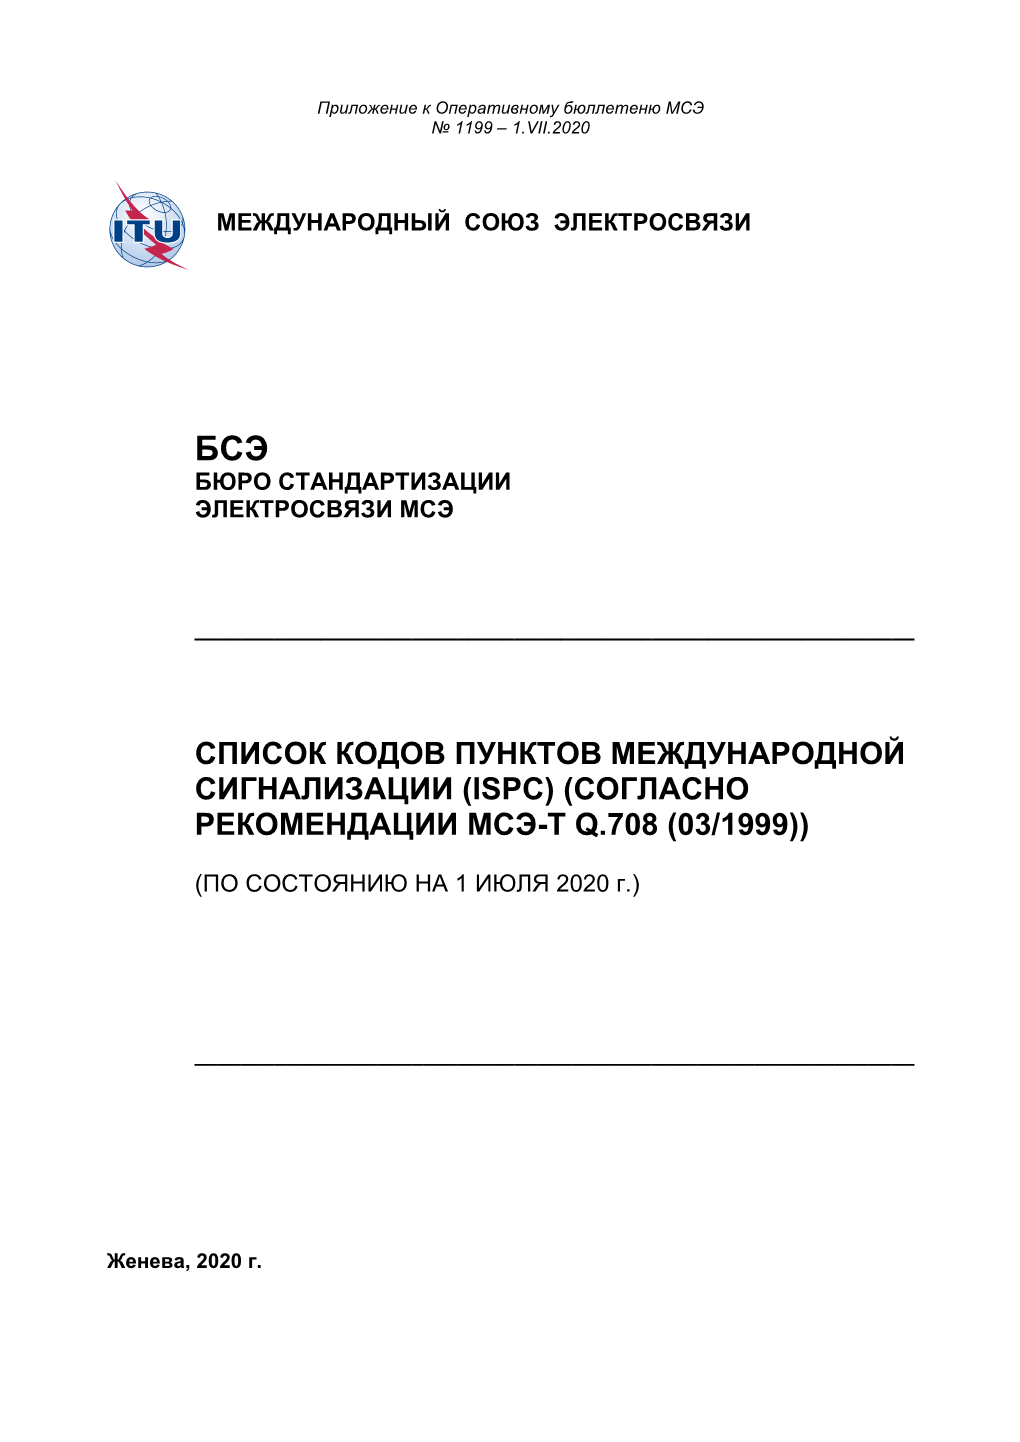 List of International Signalling Point Codes (ISPC)